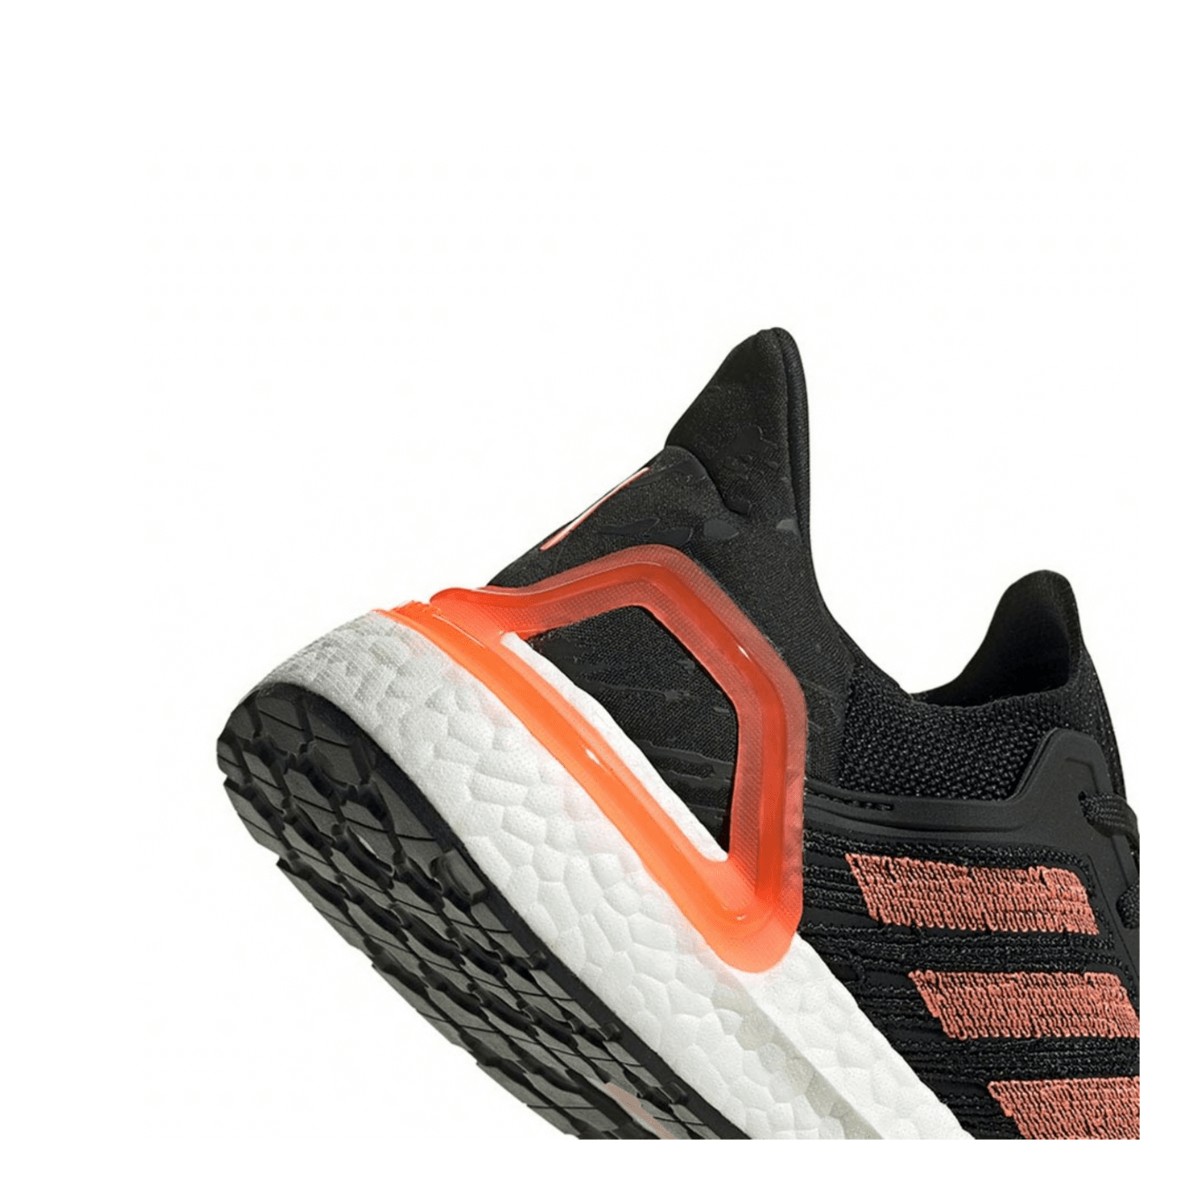 adidas ultra boost orange and black